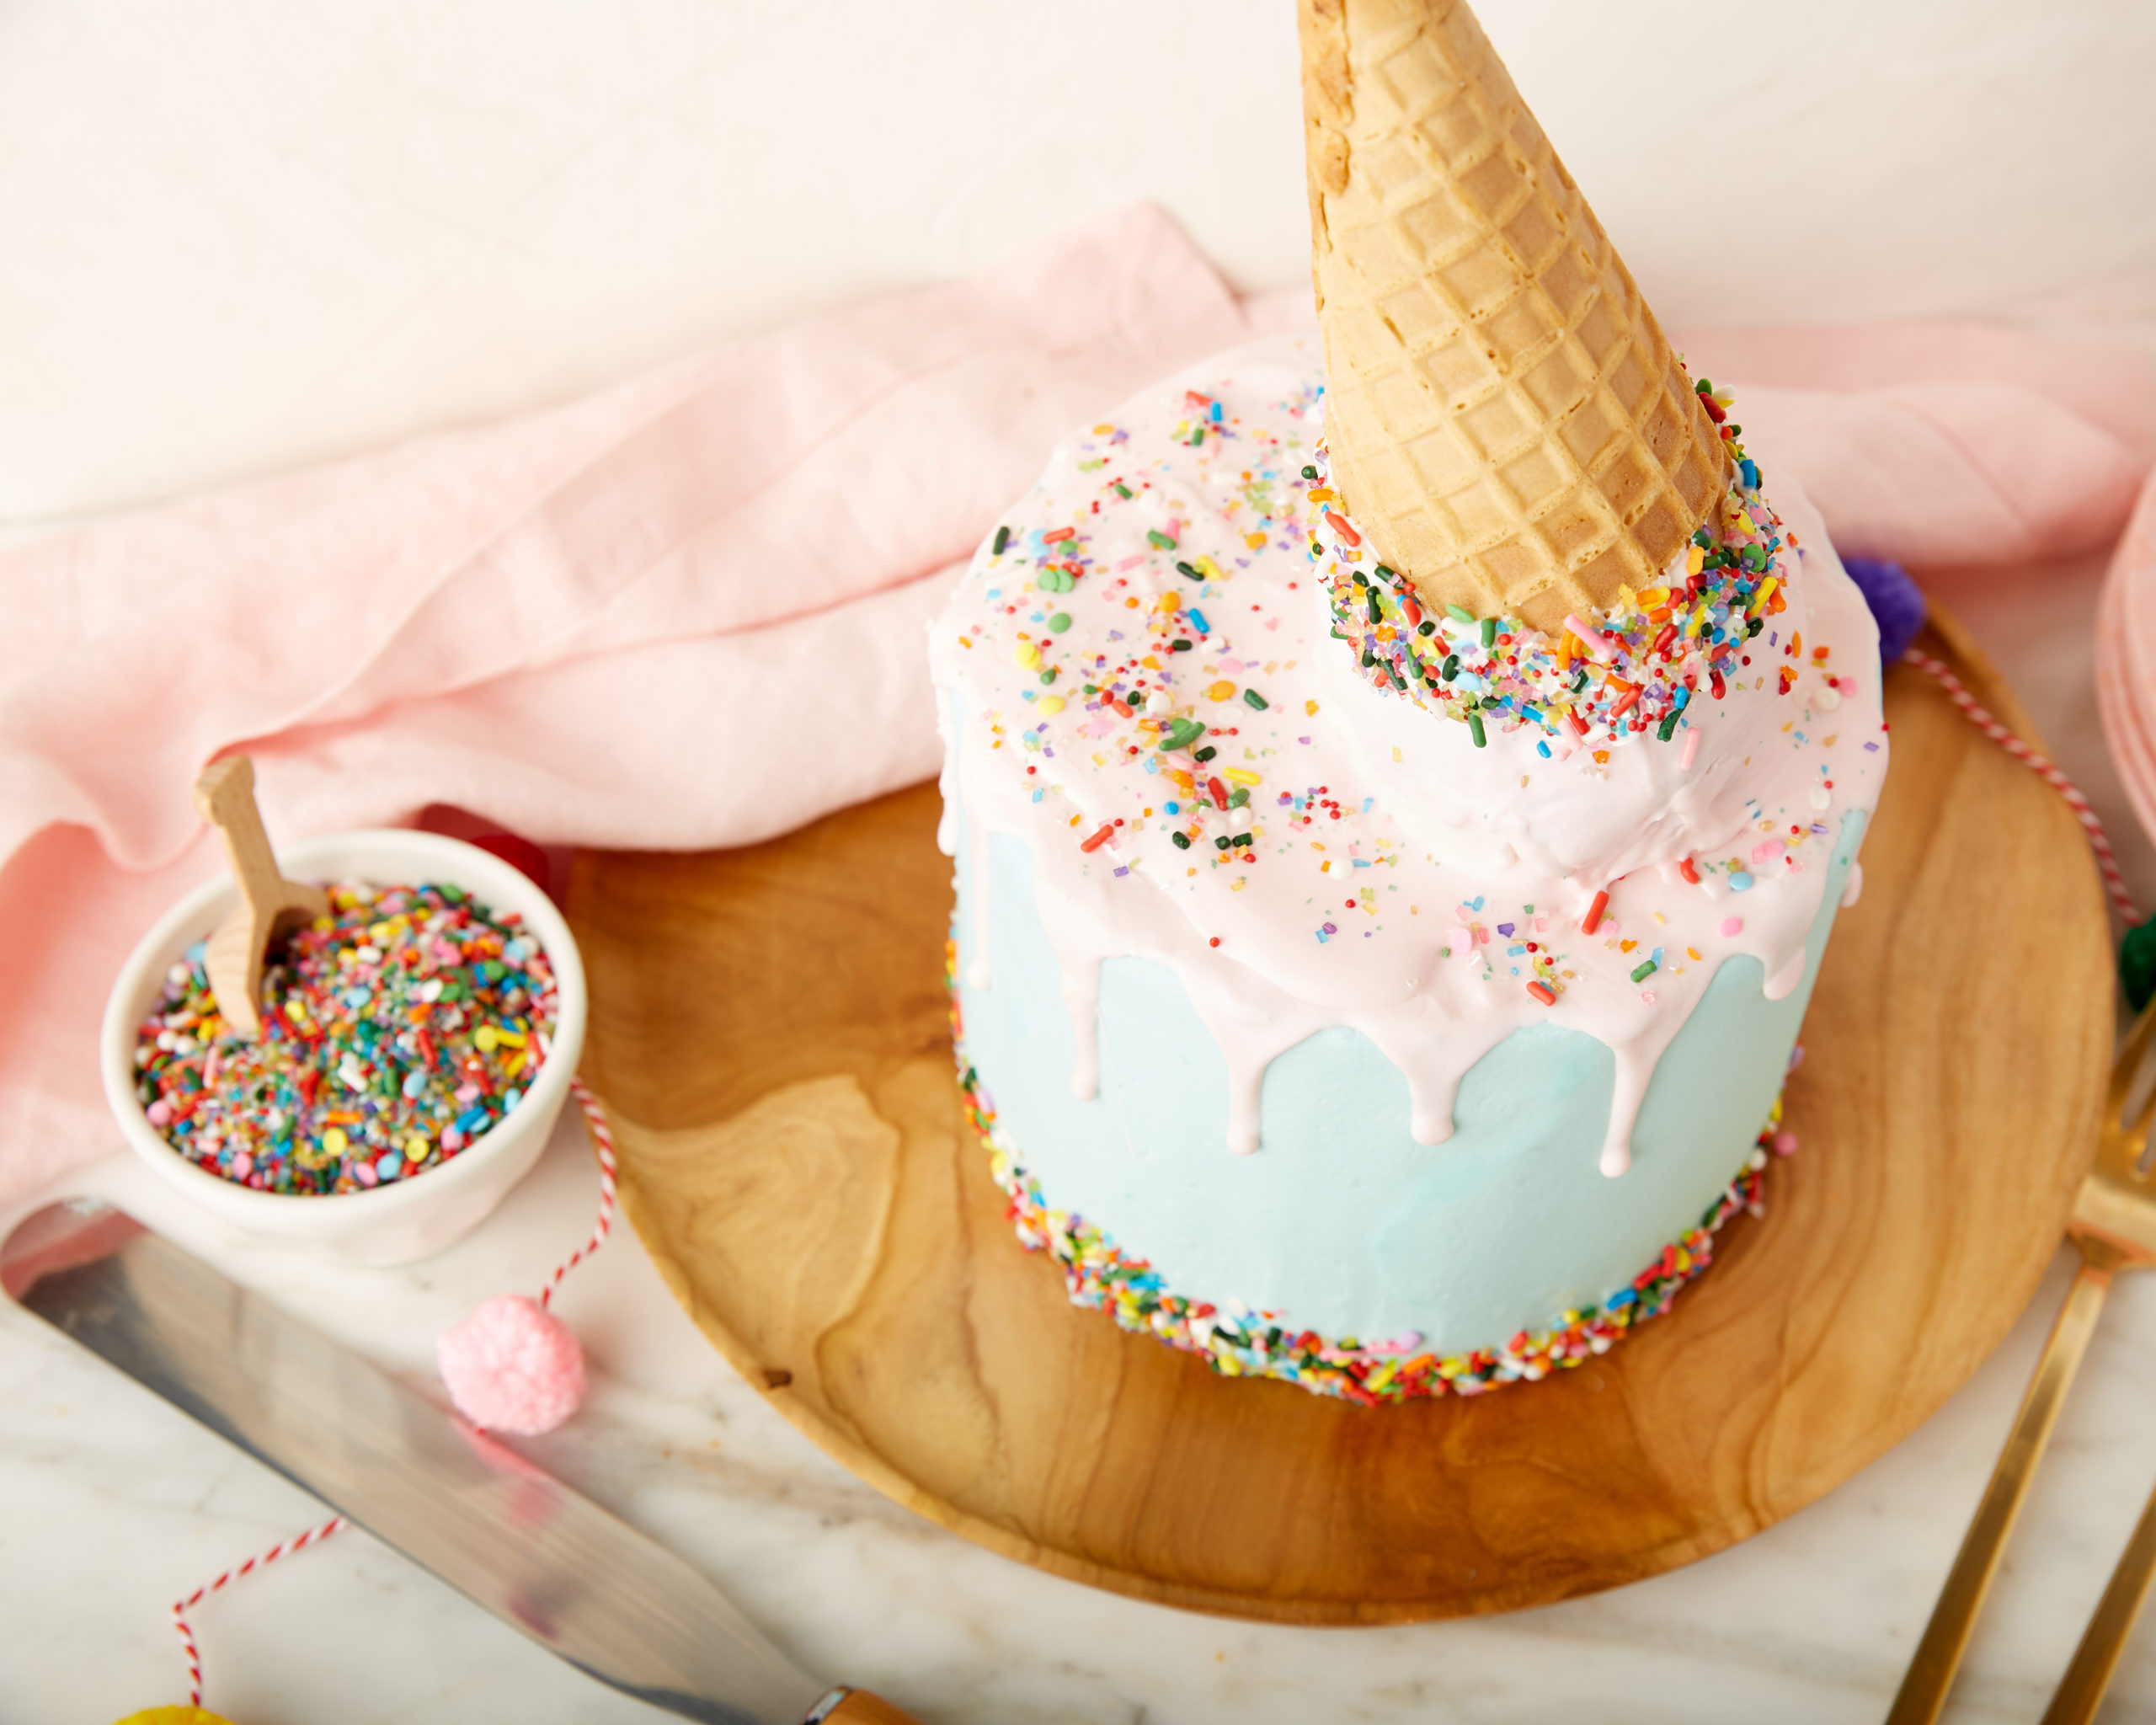 Melted ice cream cake recipe